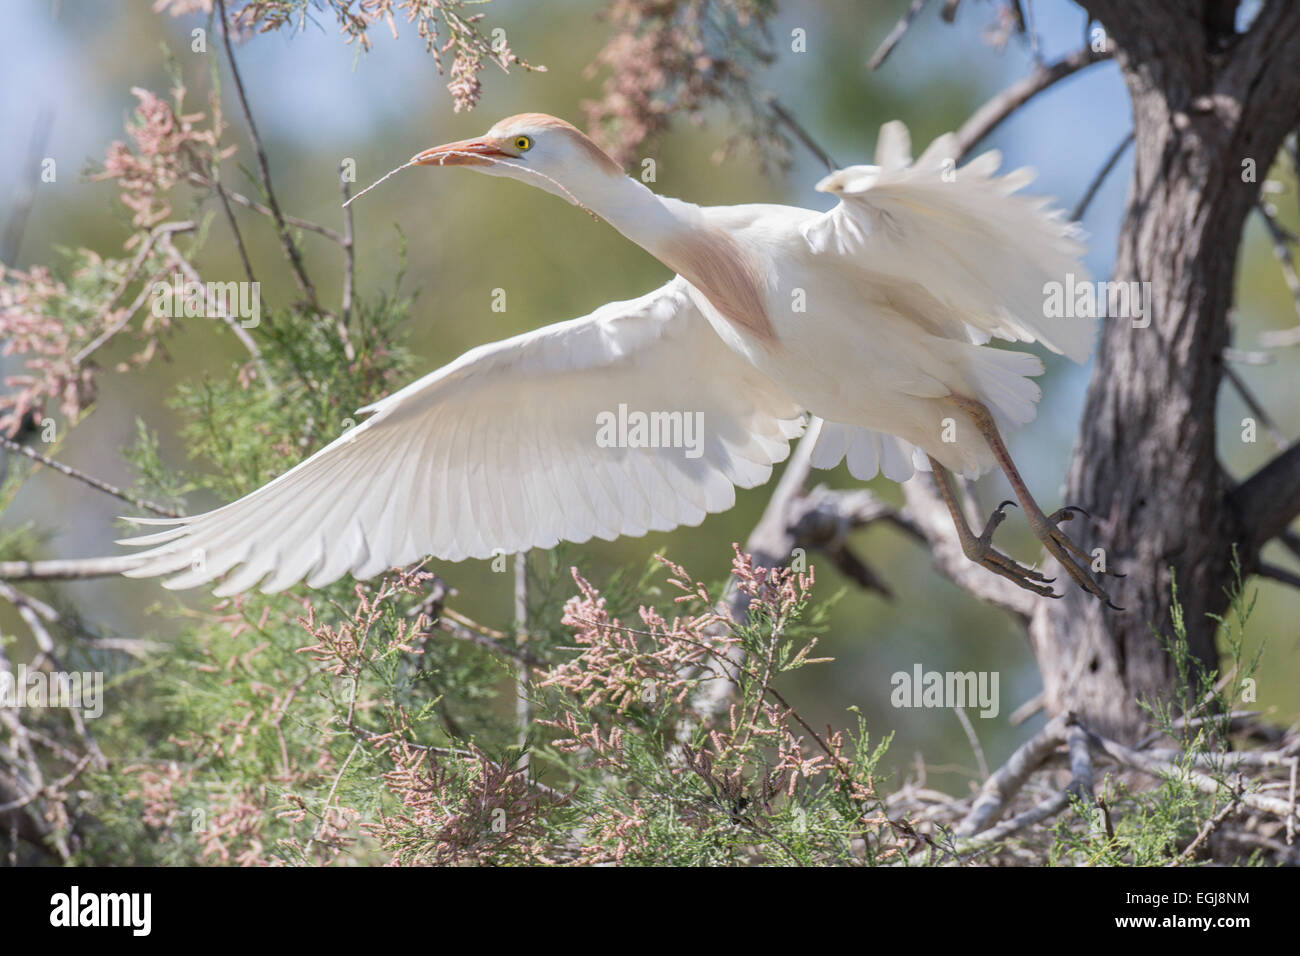 PARC ORNITOLOGIQUE DU PONT DE GAU, FRANCE - MAY 15, 2014: Flying cattle egret (Bubulcus ibis) in breeding plumage. Stock Photo